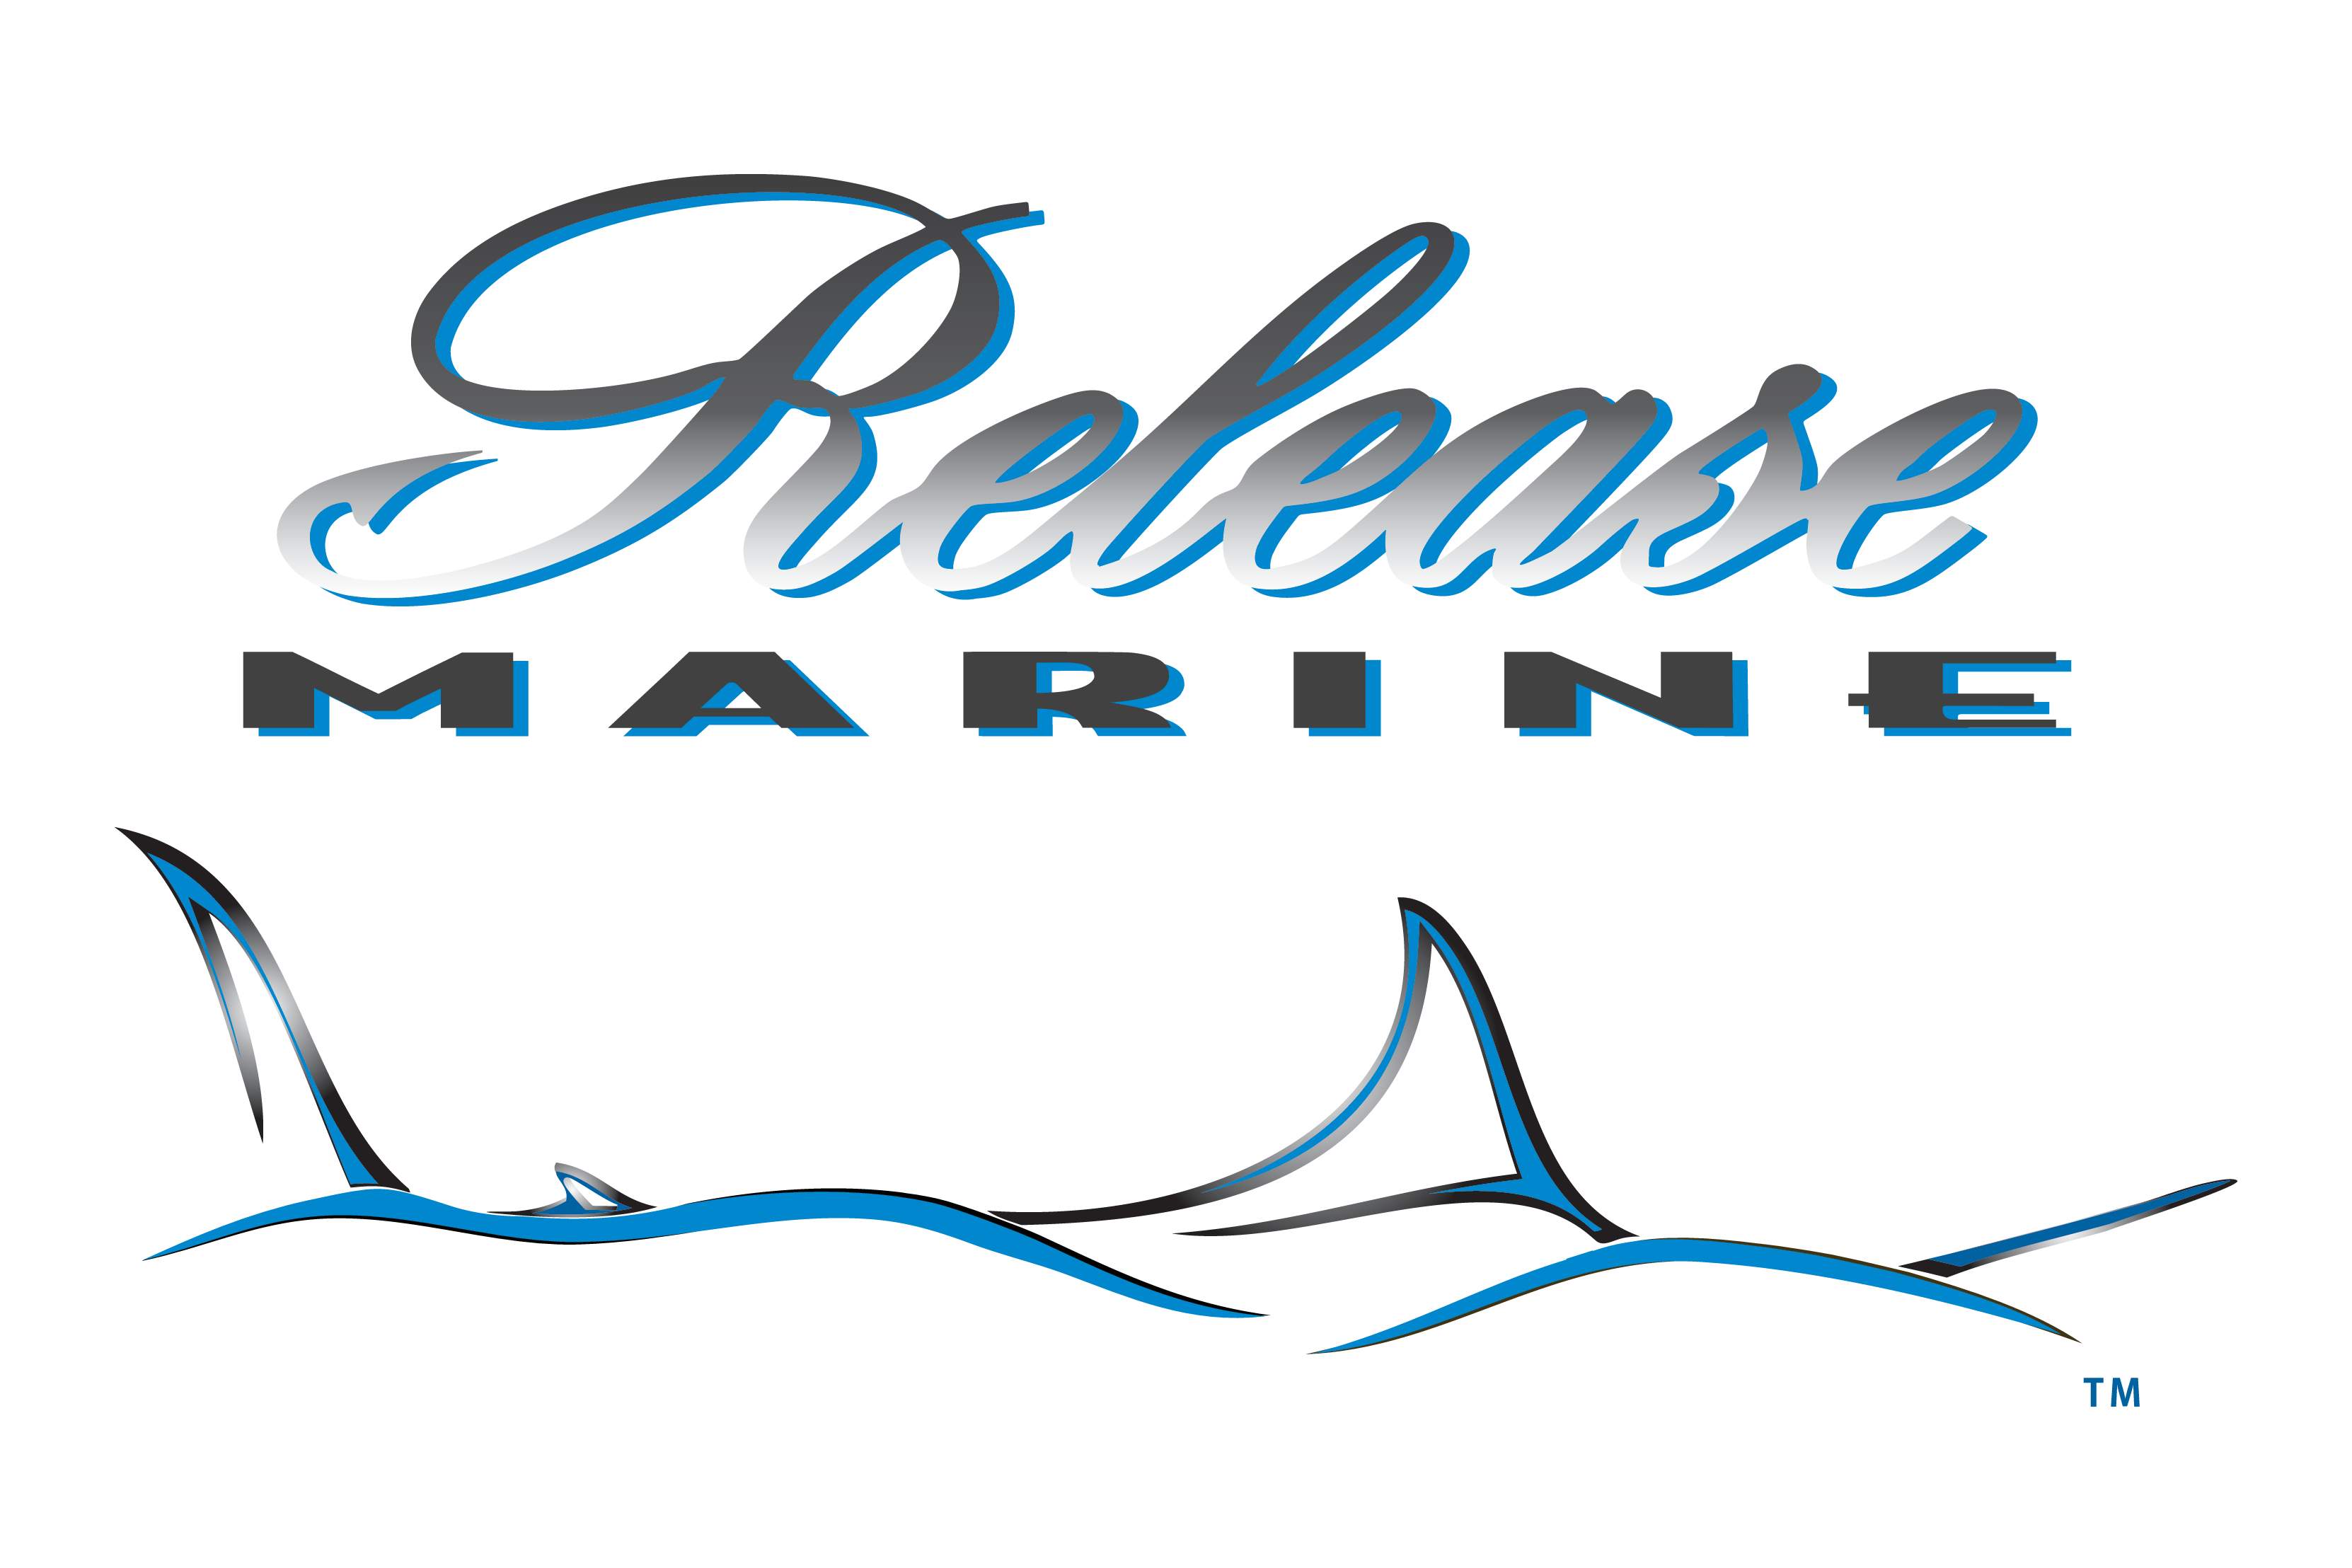 Release Marine logo